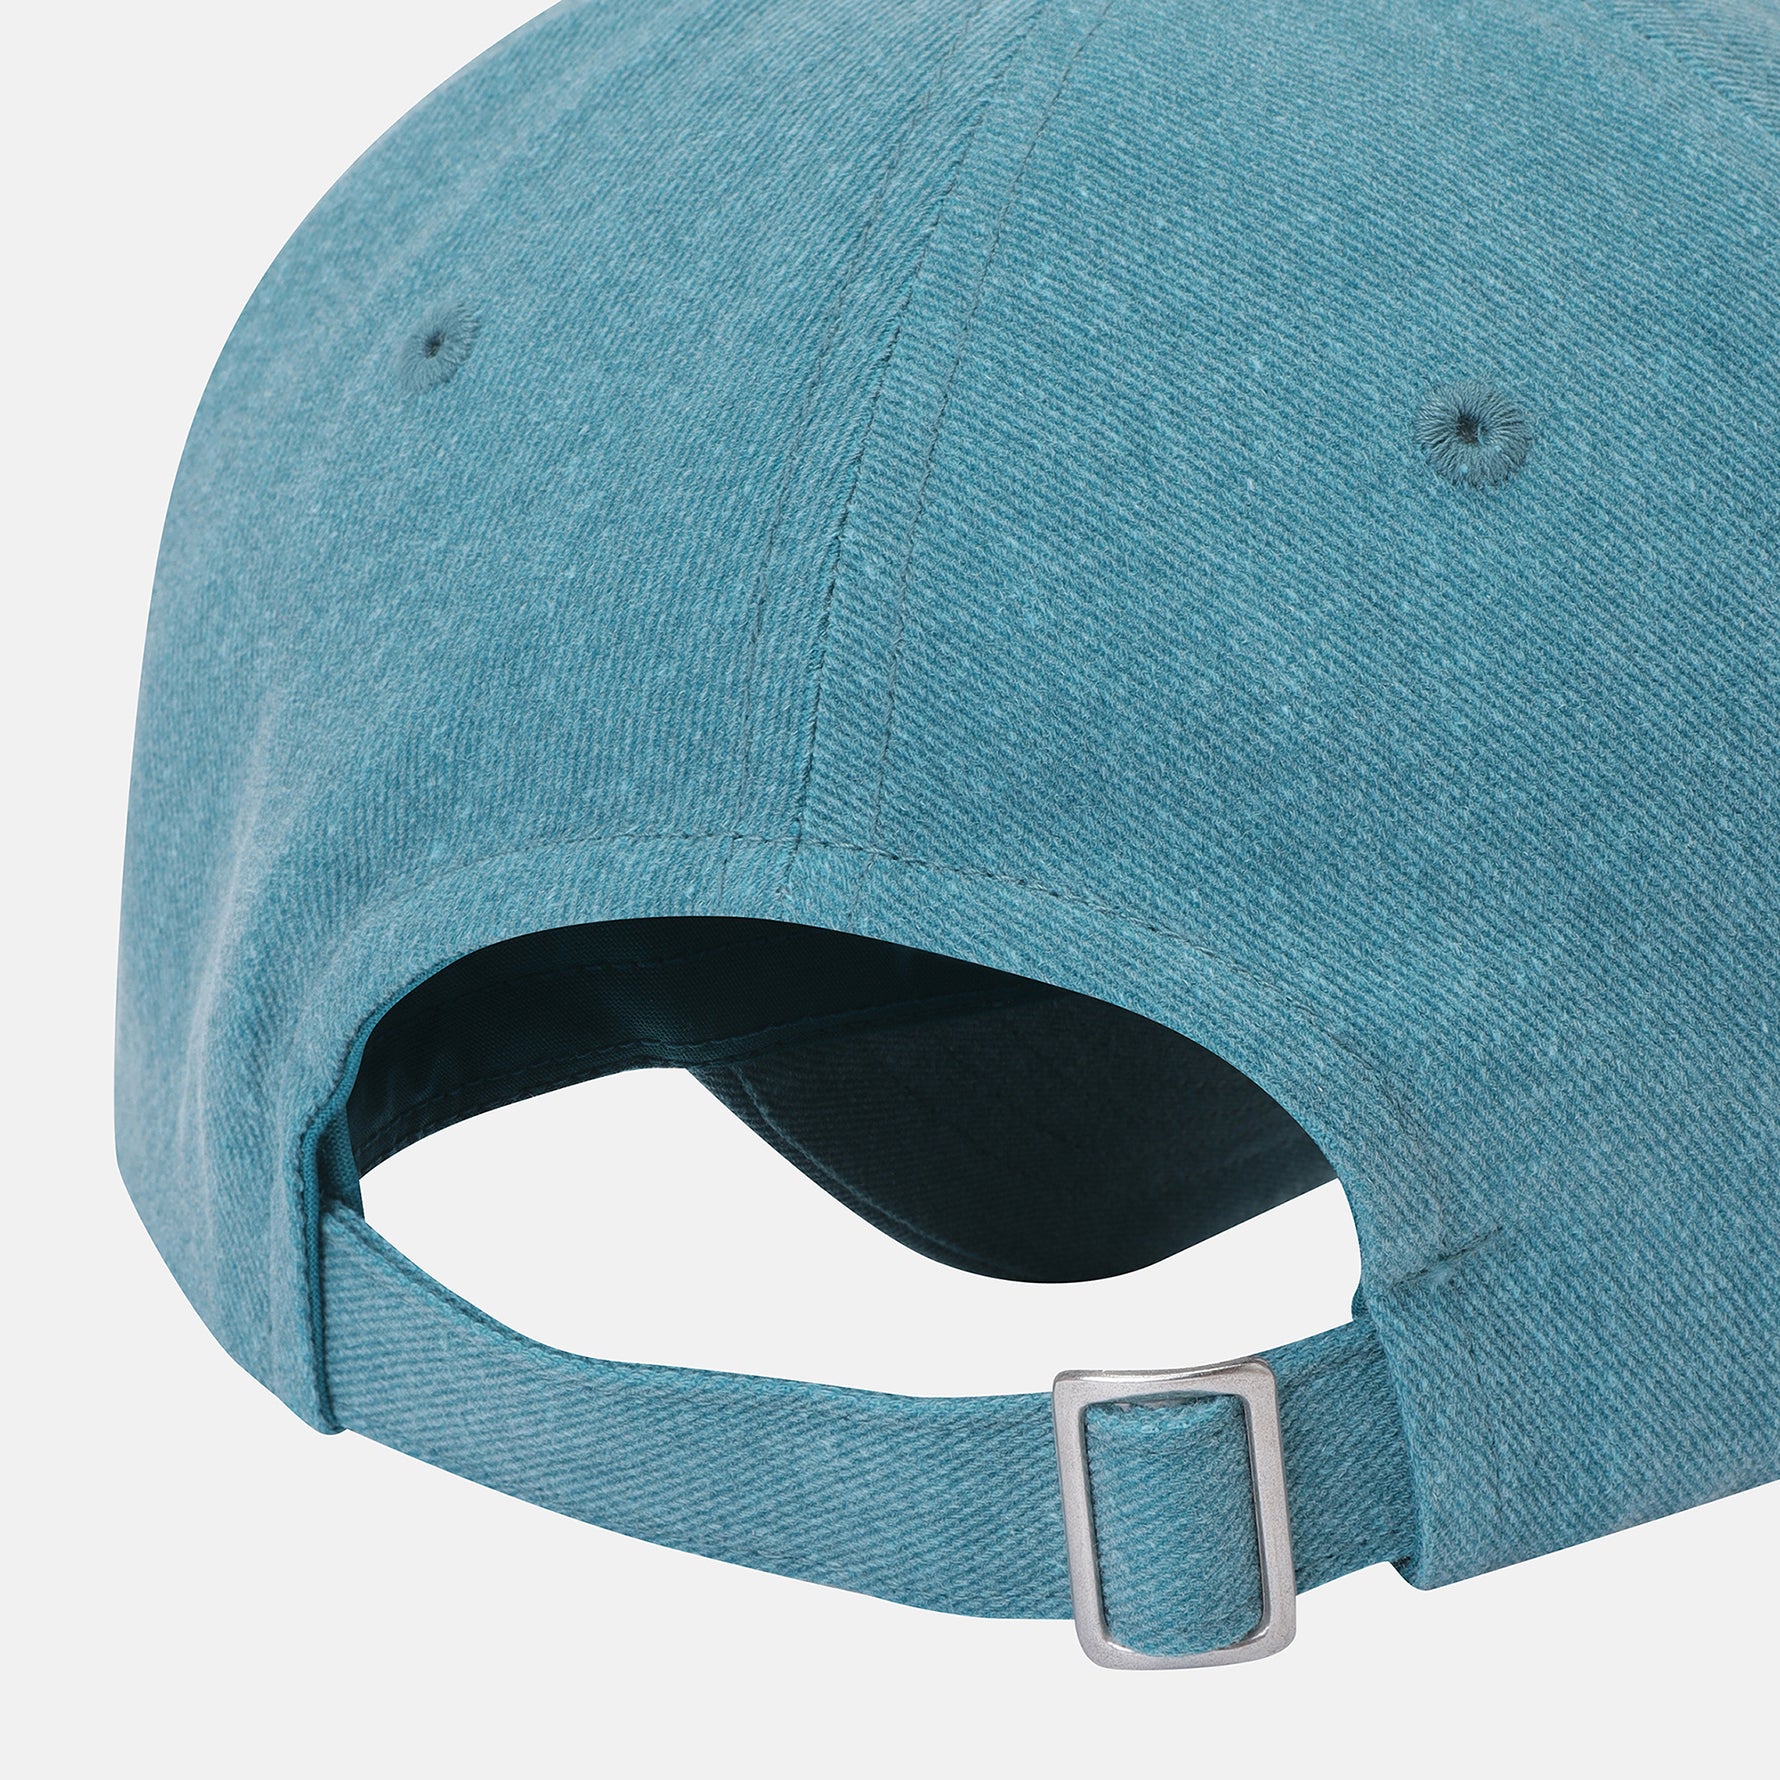 SPORTSBASIC WASHING GRAPHIC BASEBALL CAP 運動帽